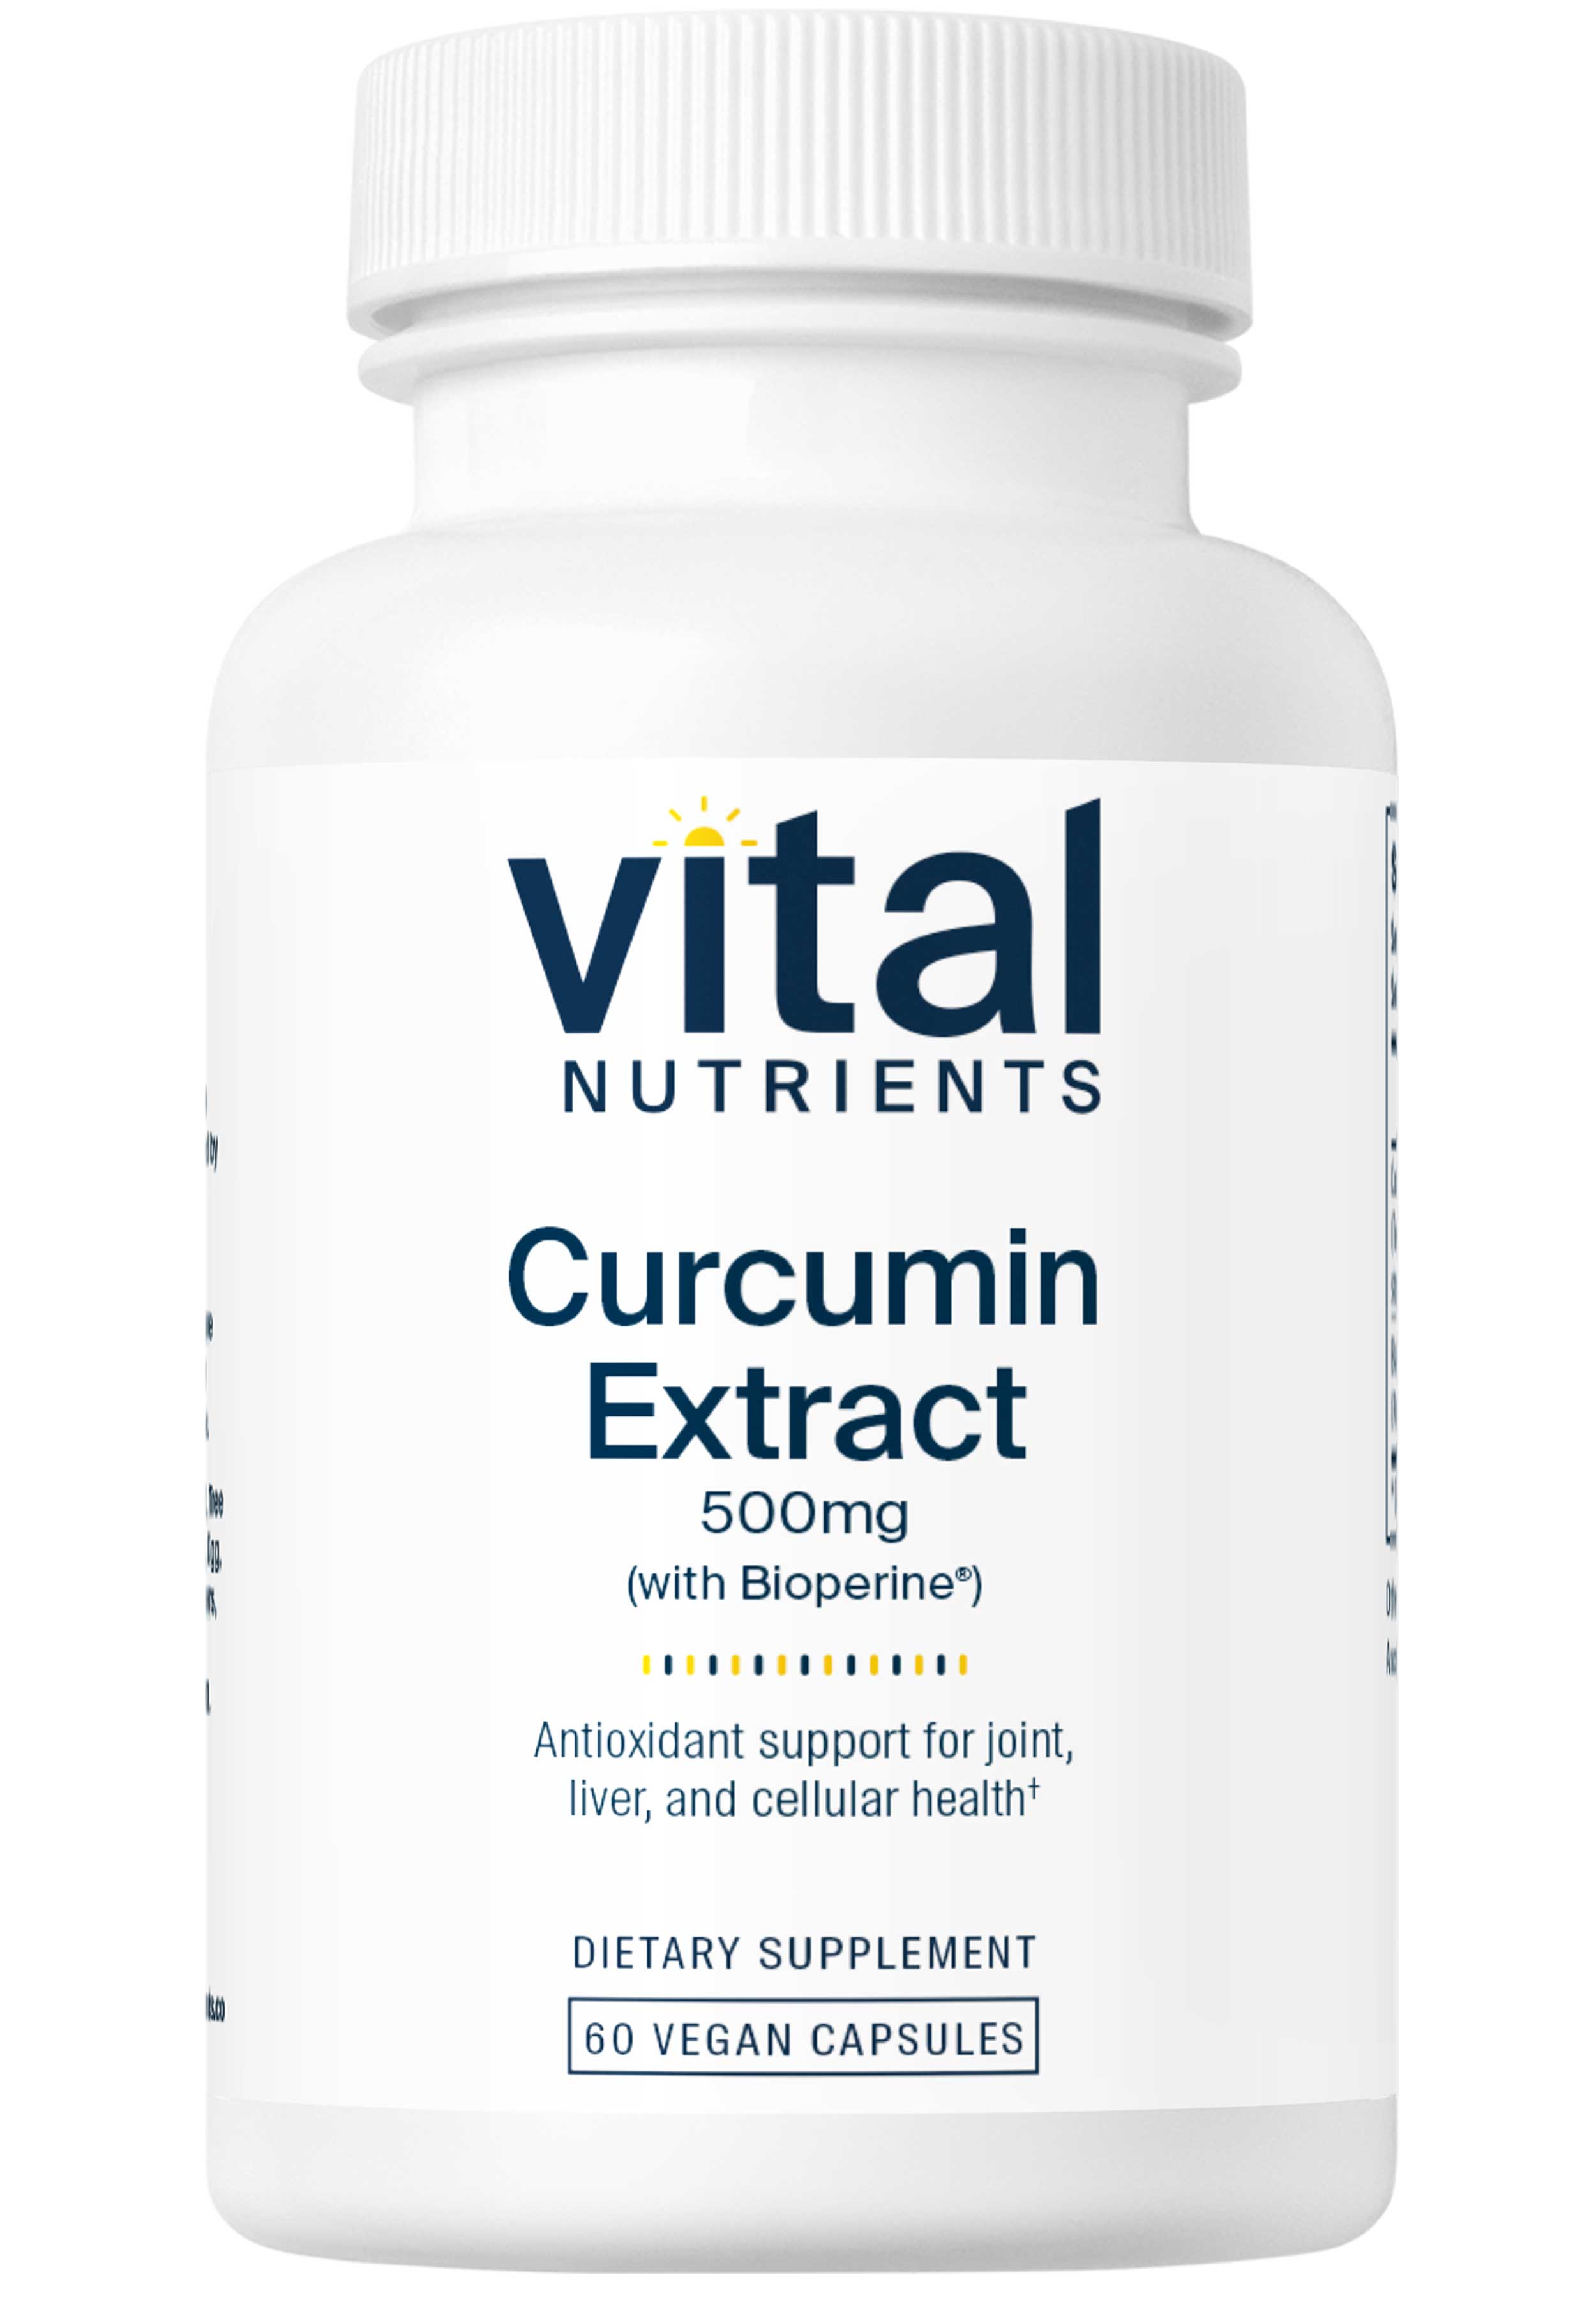 Vital Nutrients Curcumin Extract 500mg